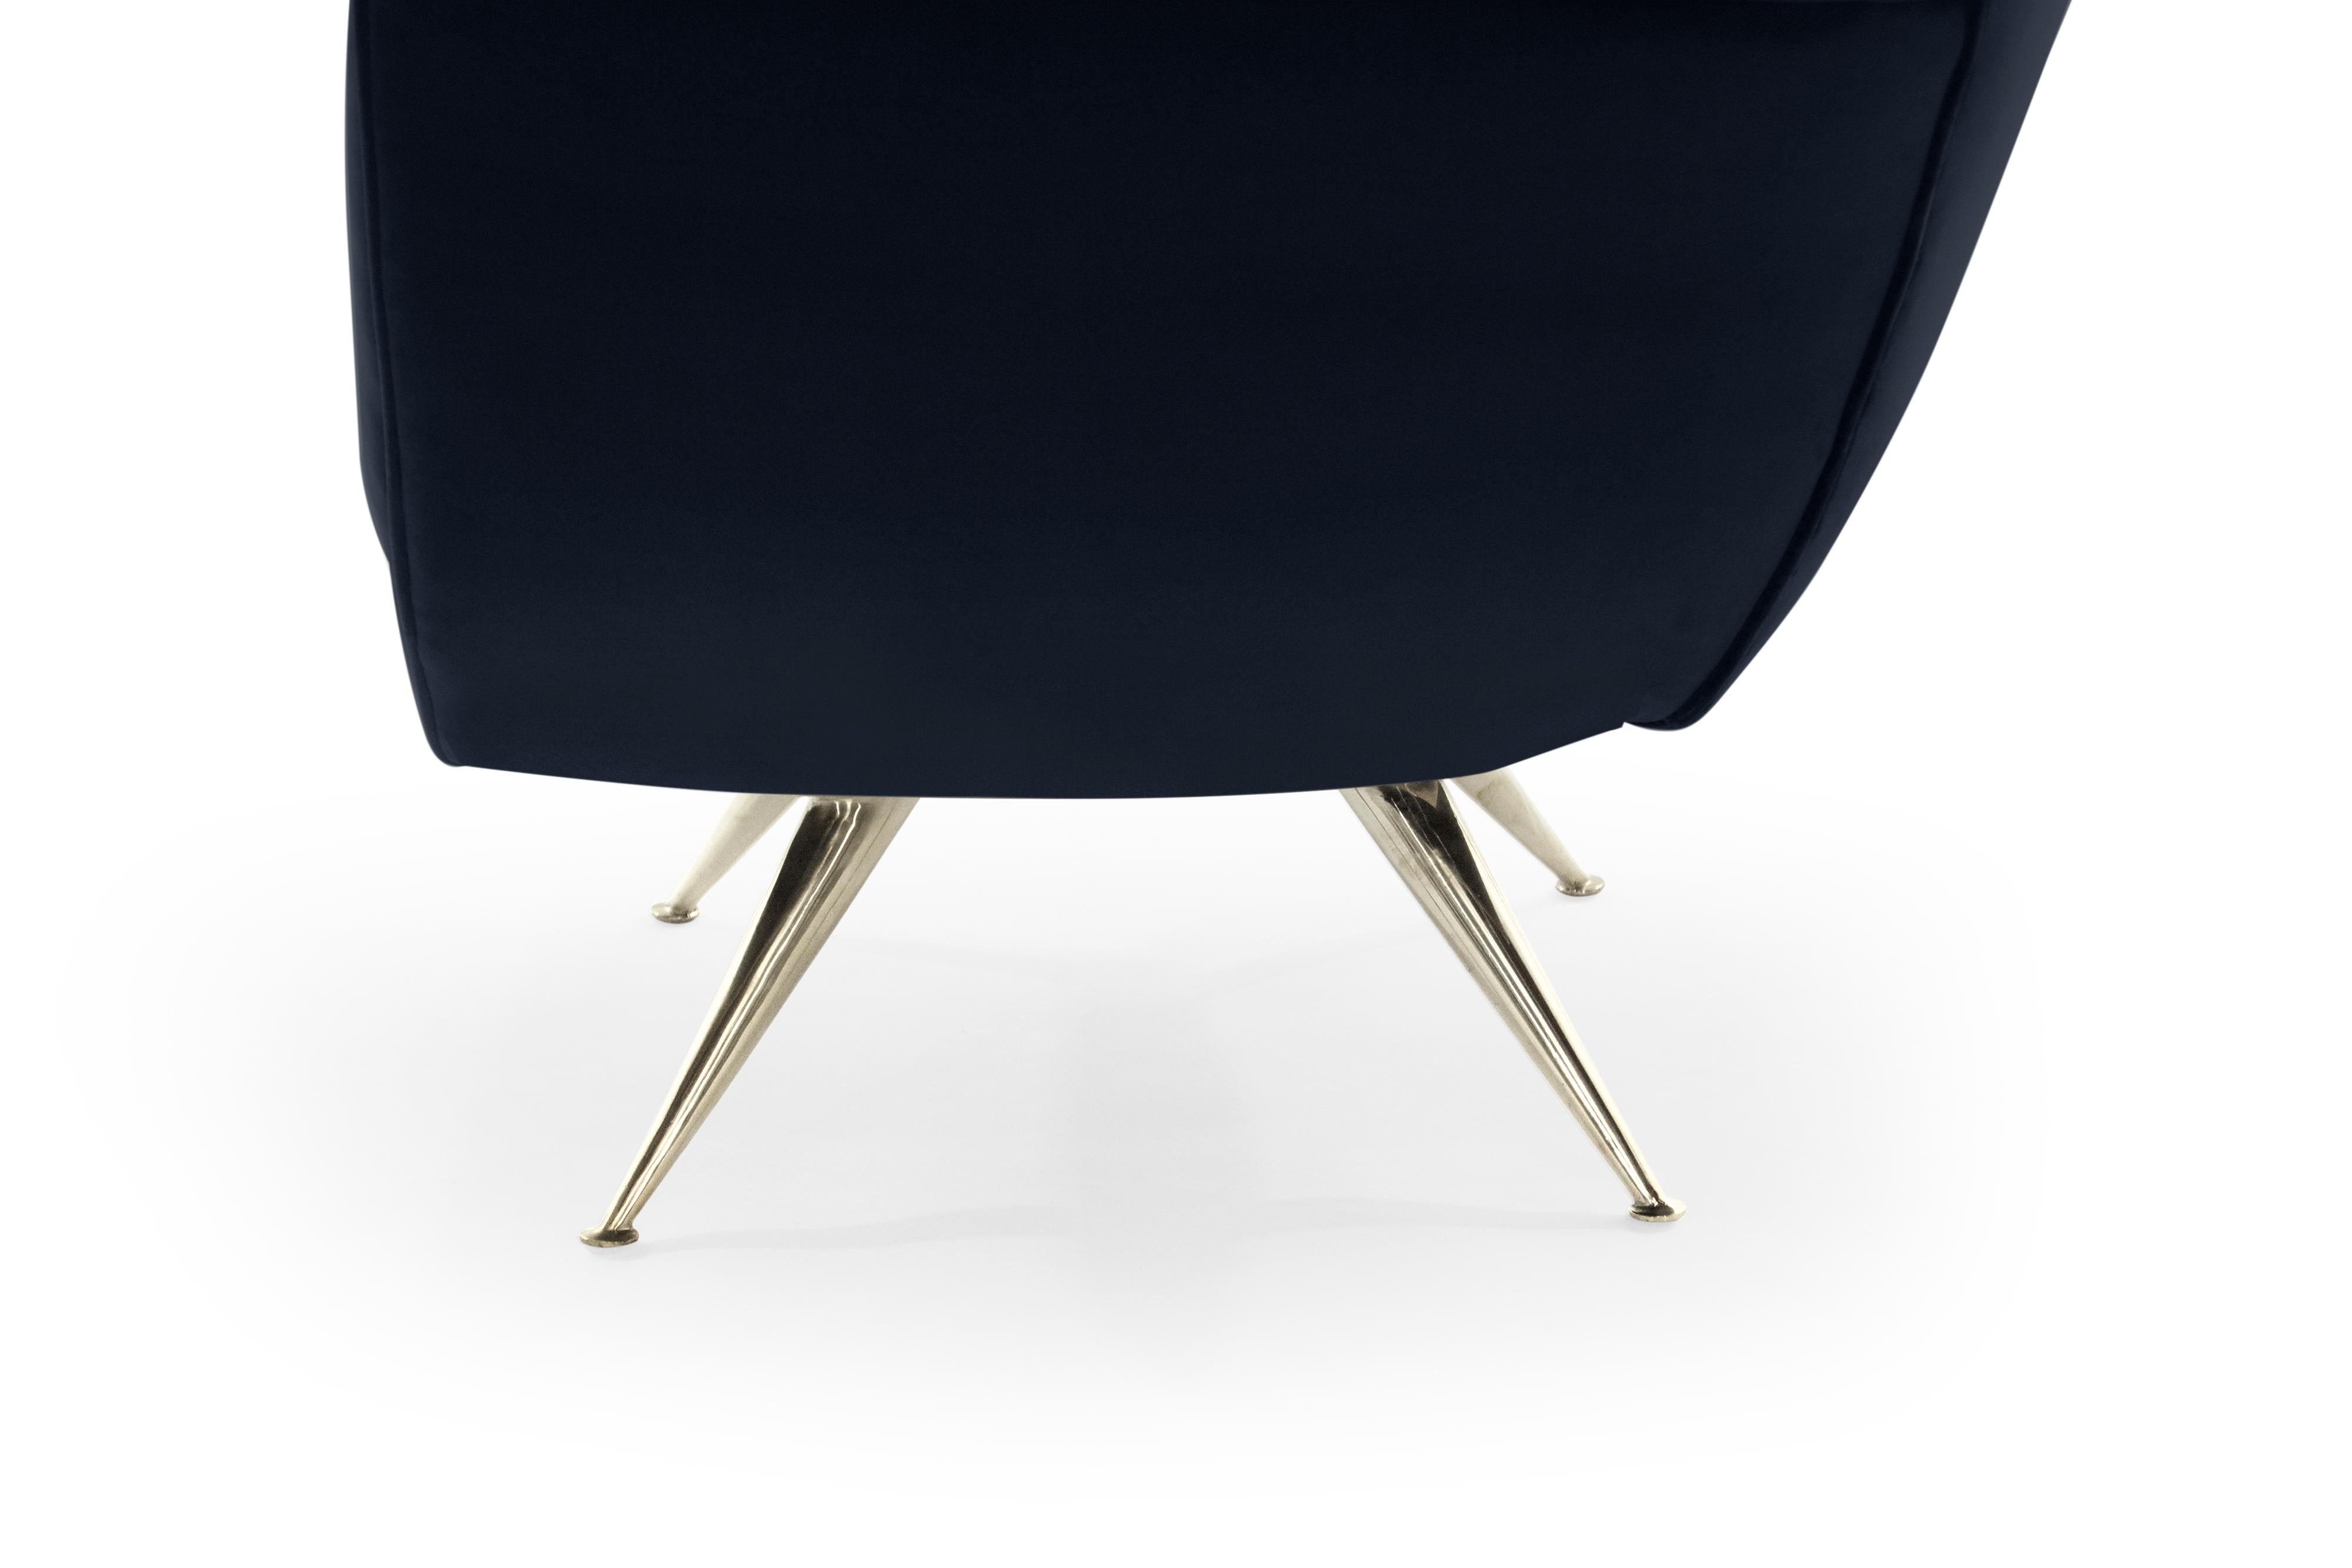 Brass Mid-Century Modern Swivel Chairs by Henry Glass in Navy Velvet